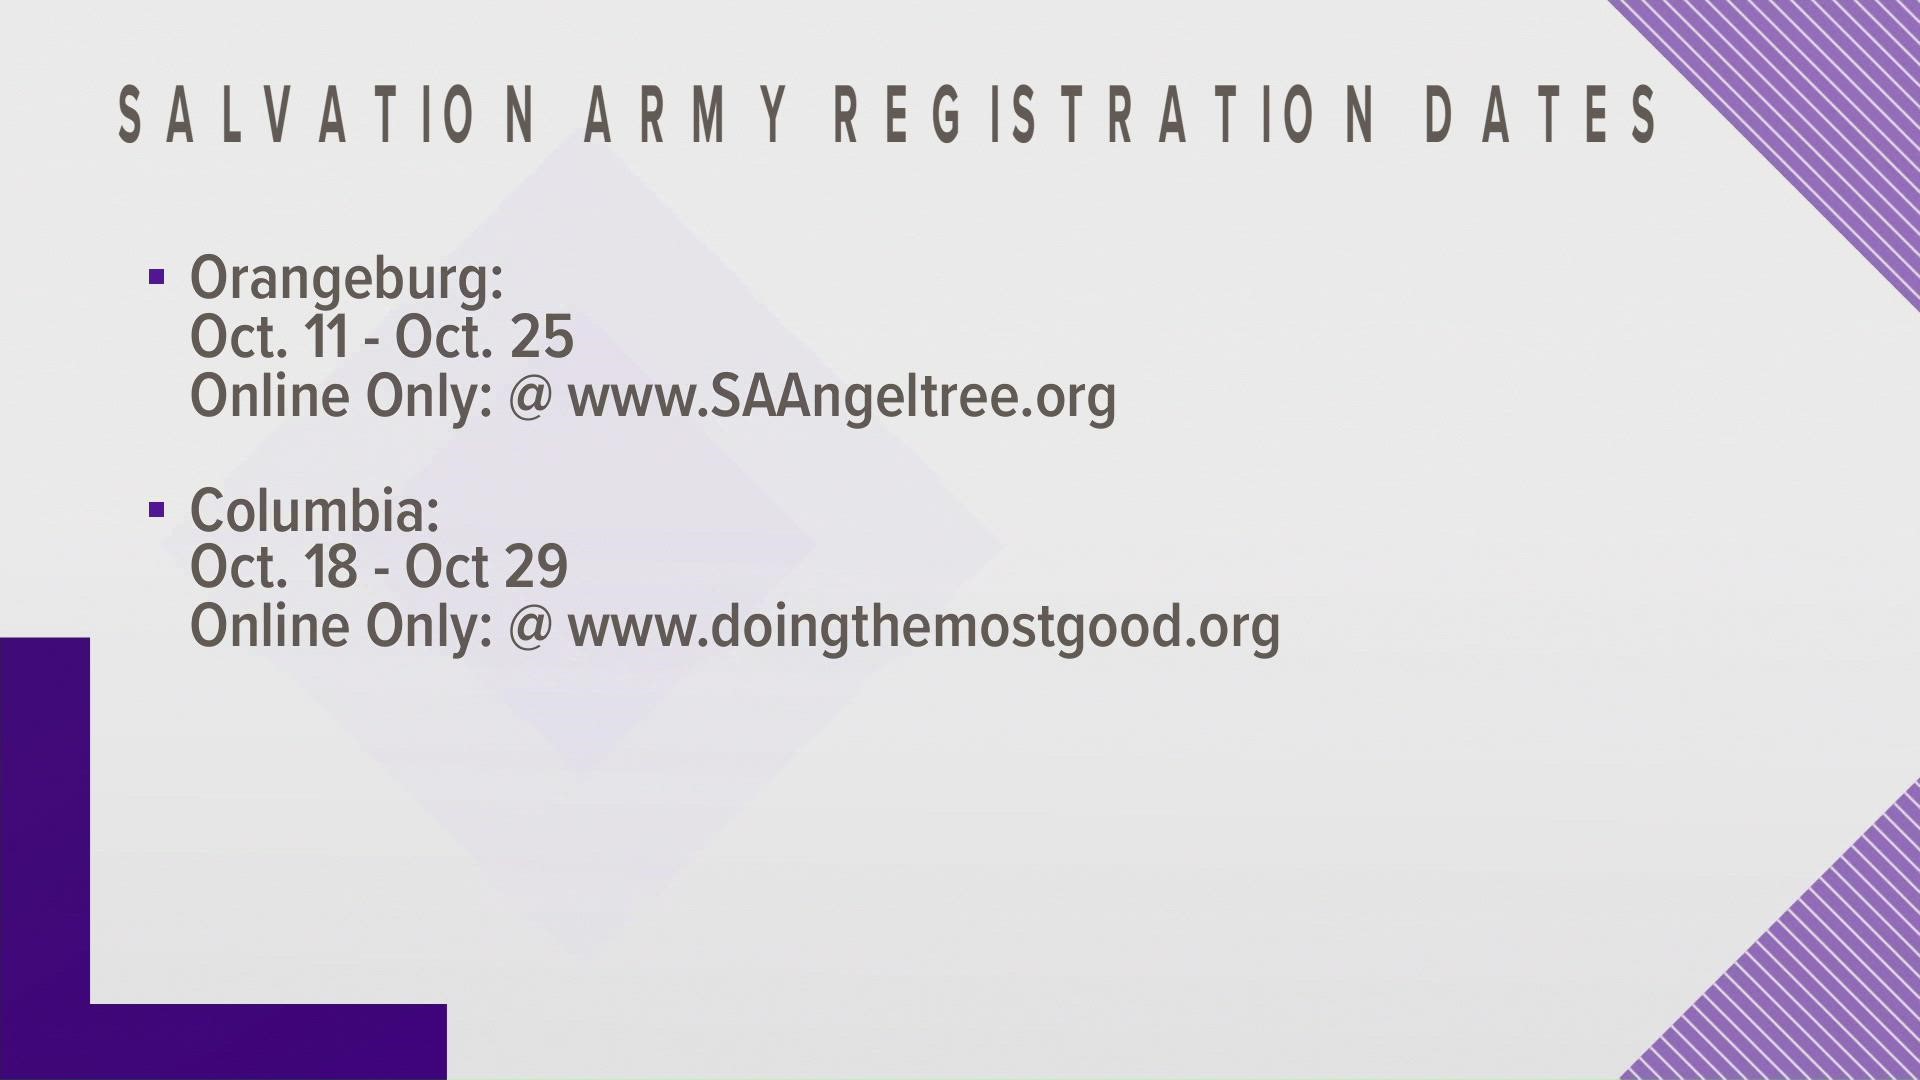 Registration in Columbia and Orangeburg is now underway.